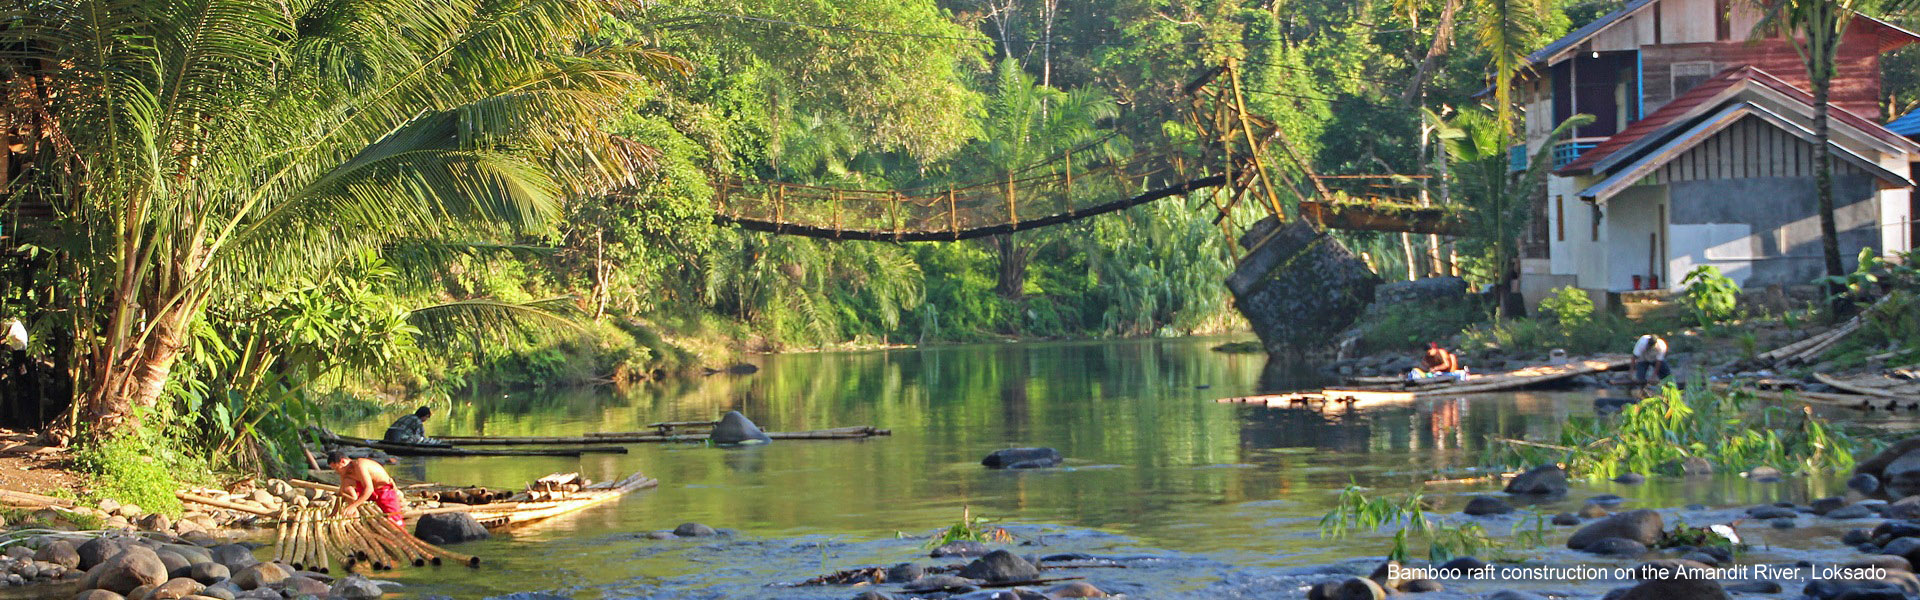 Bamboo raft construction on the Amandit River, Loksado